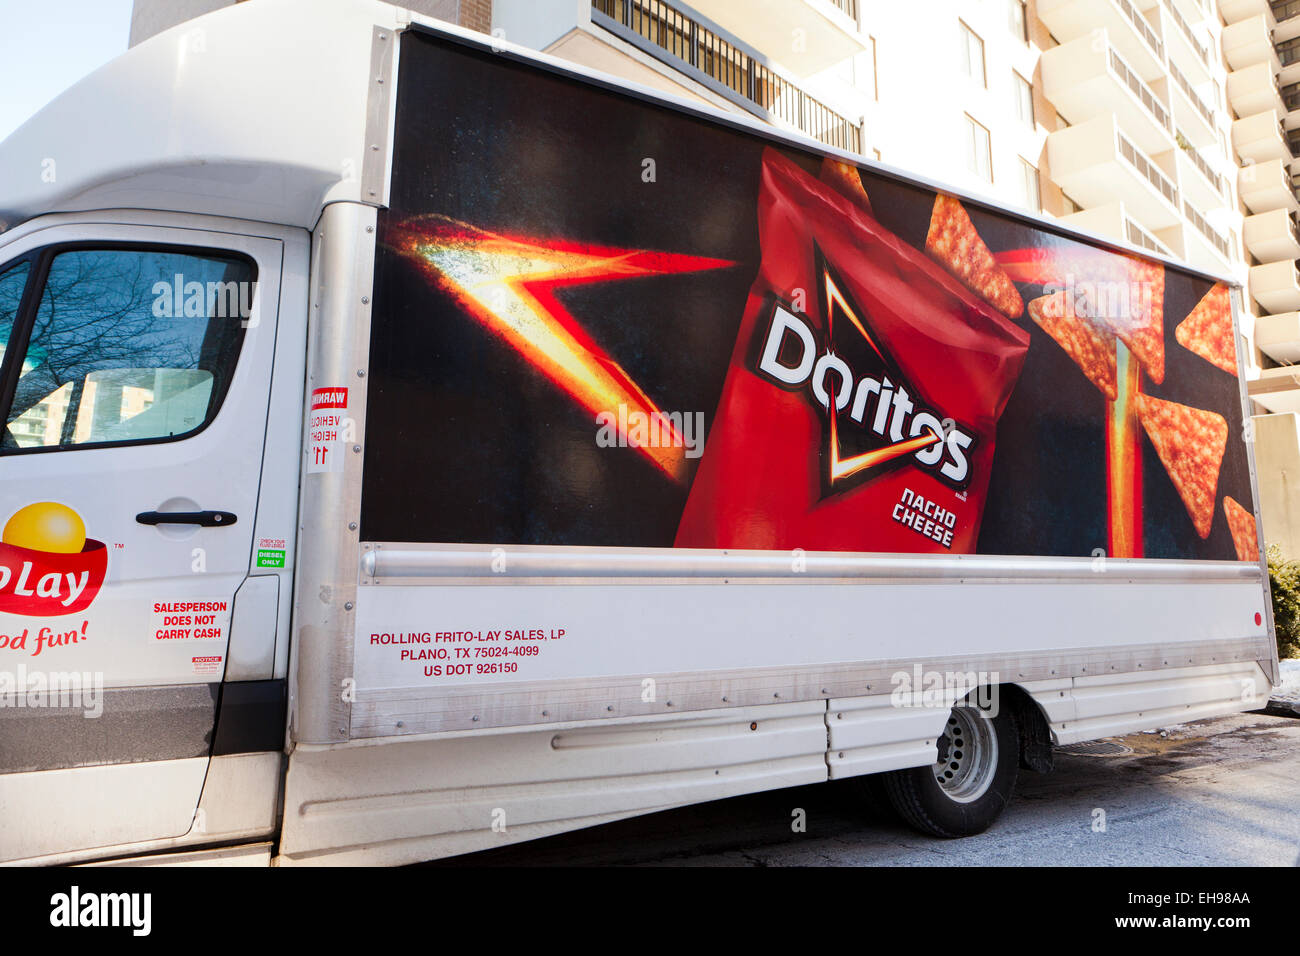 Doritos tortilla chips delivery truck - USA Stock Photo